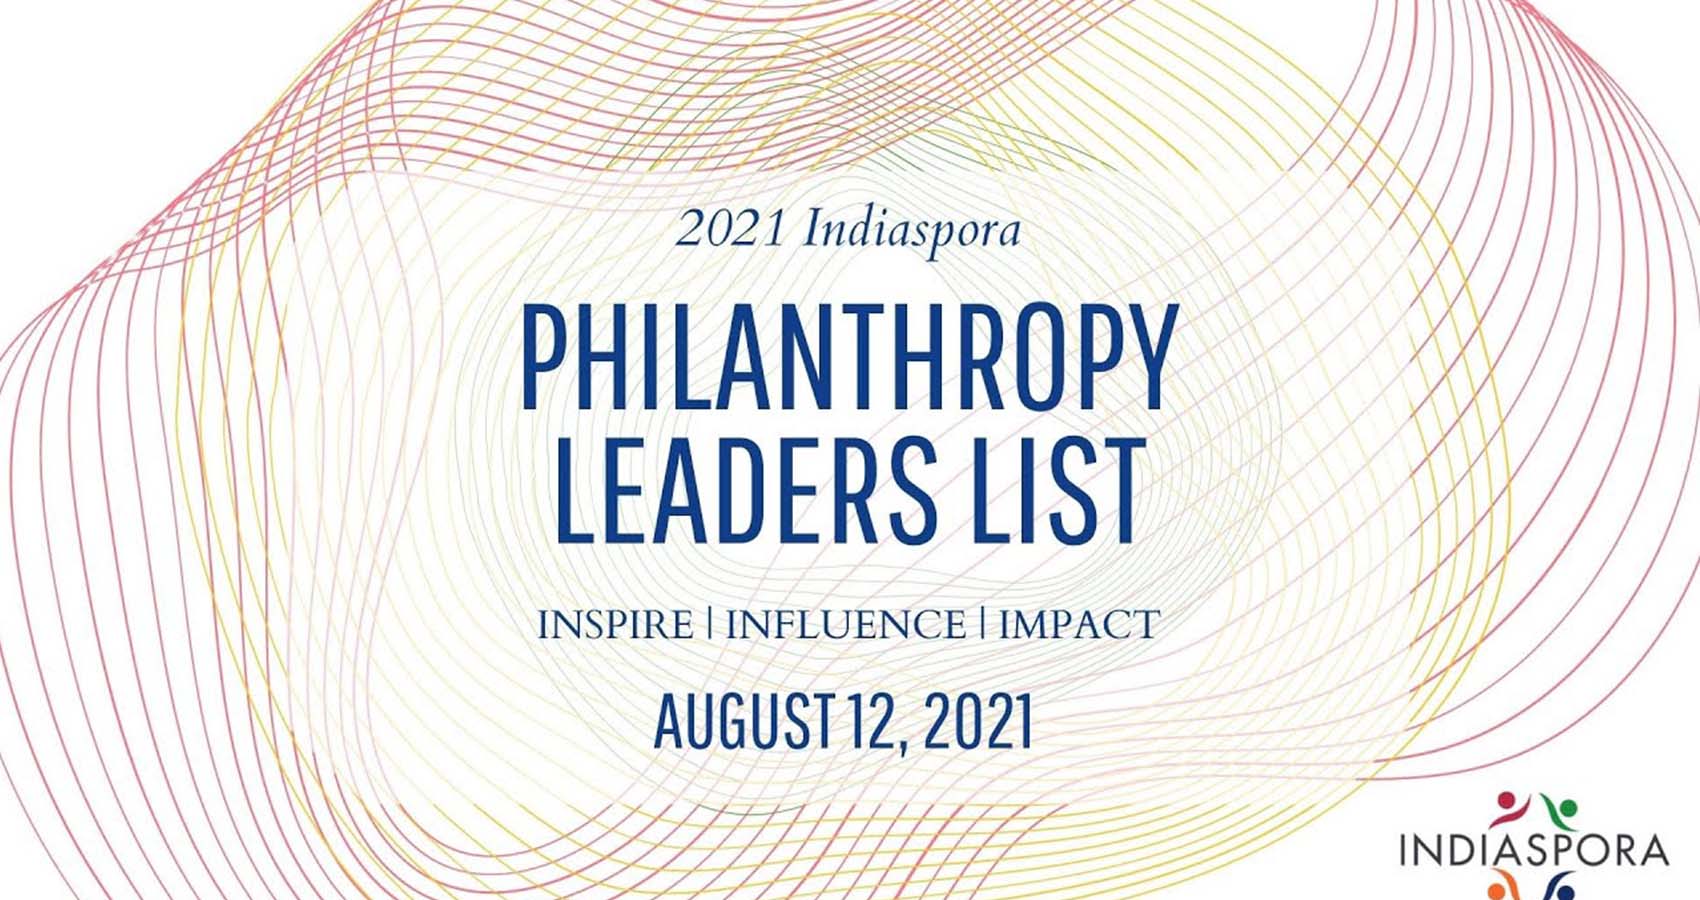 The 2021 Indiaspora Philanthropy Leaders List Spotlights 100 Diaspora Leaders